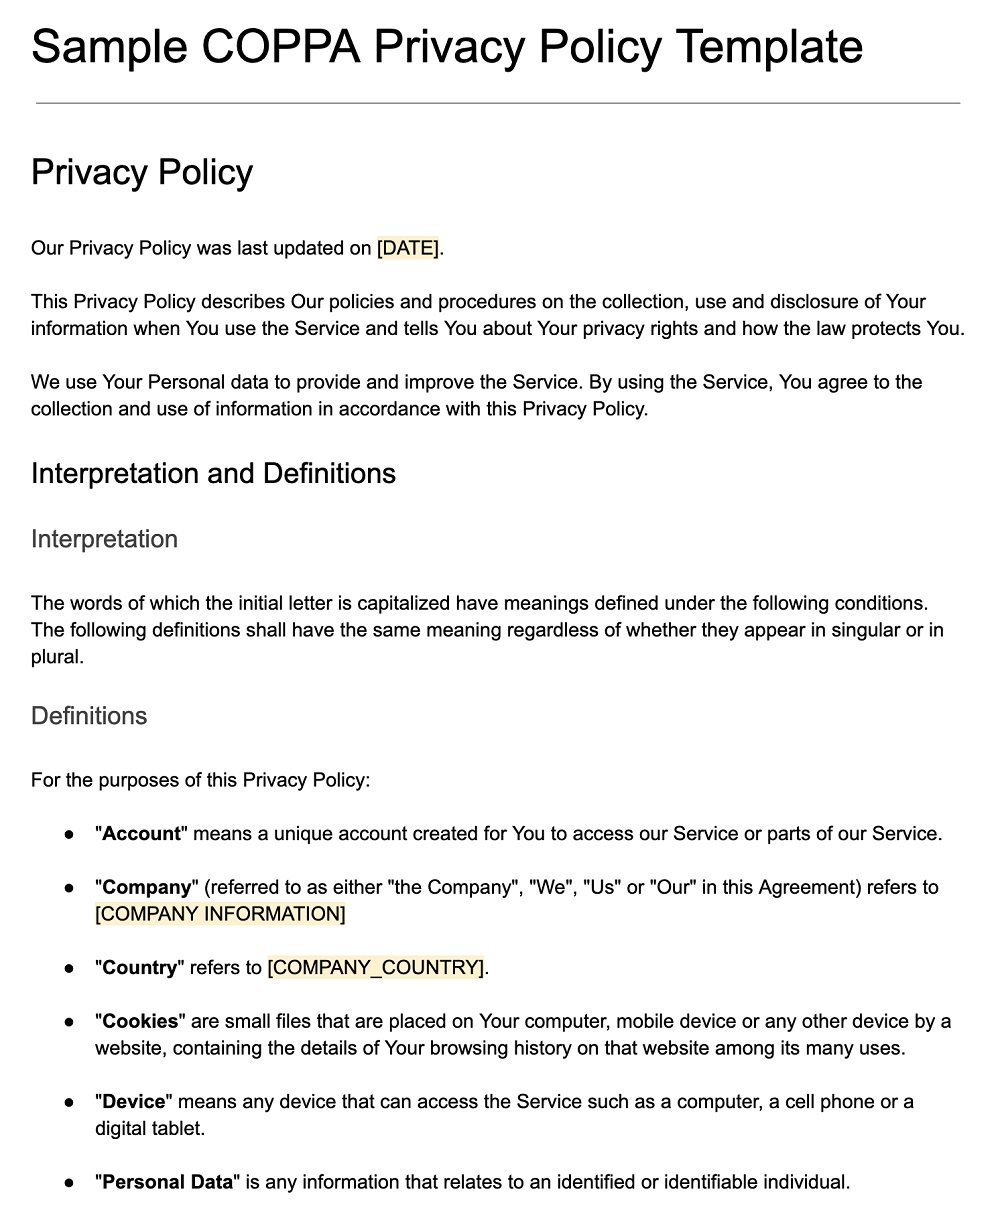 Sample COPPA Privacy Policy Template